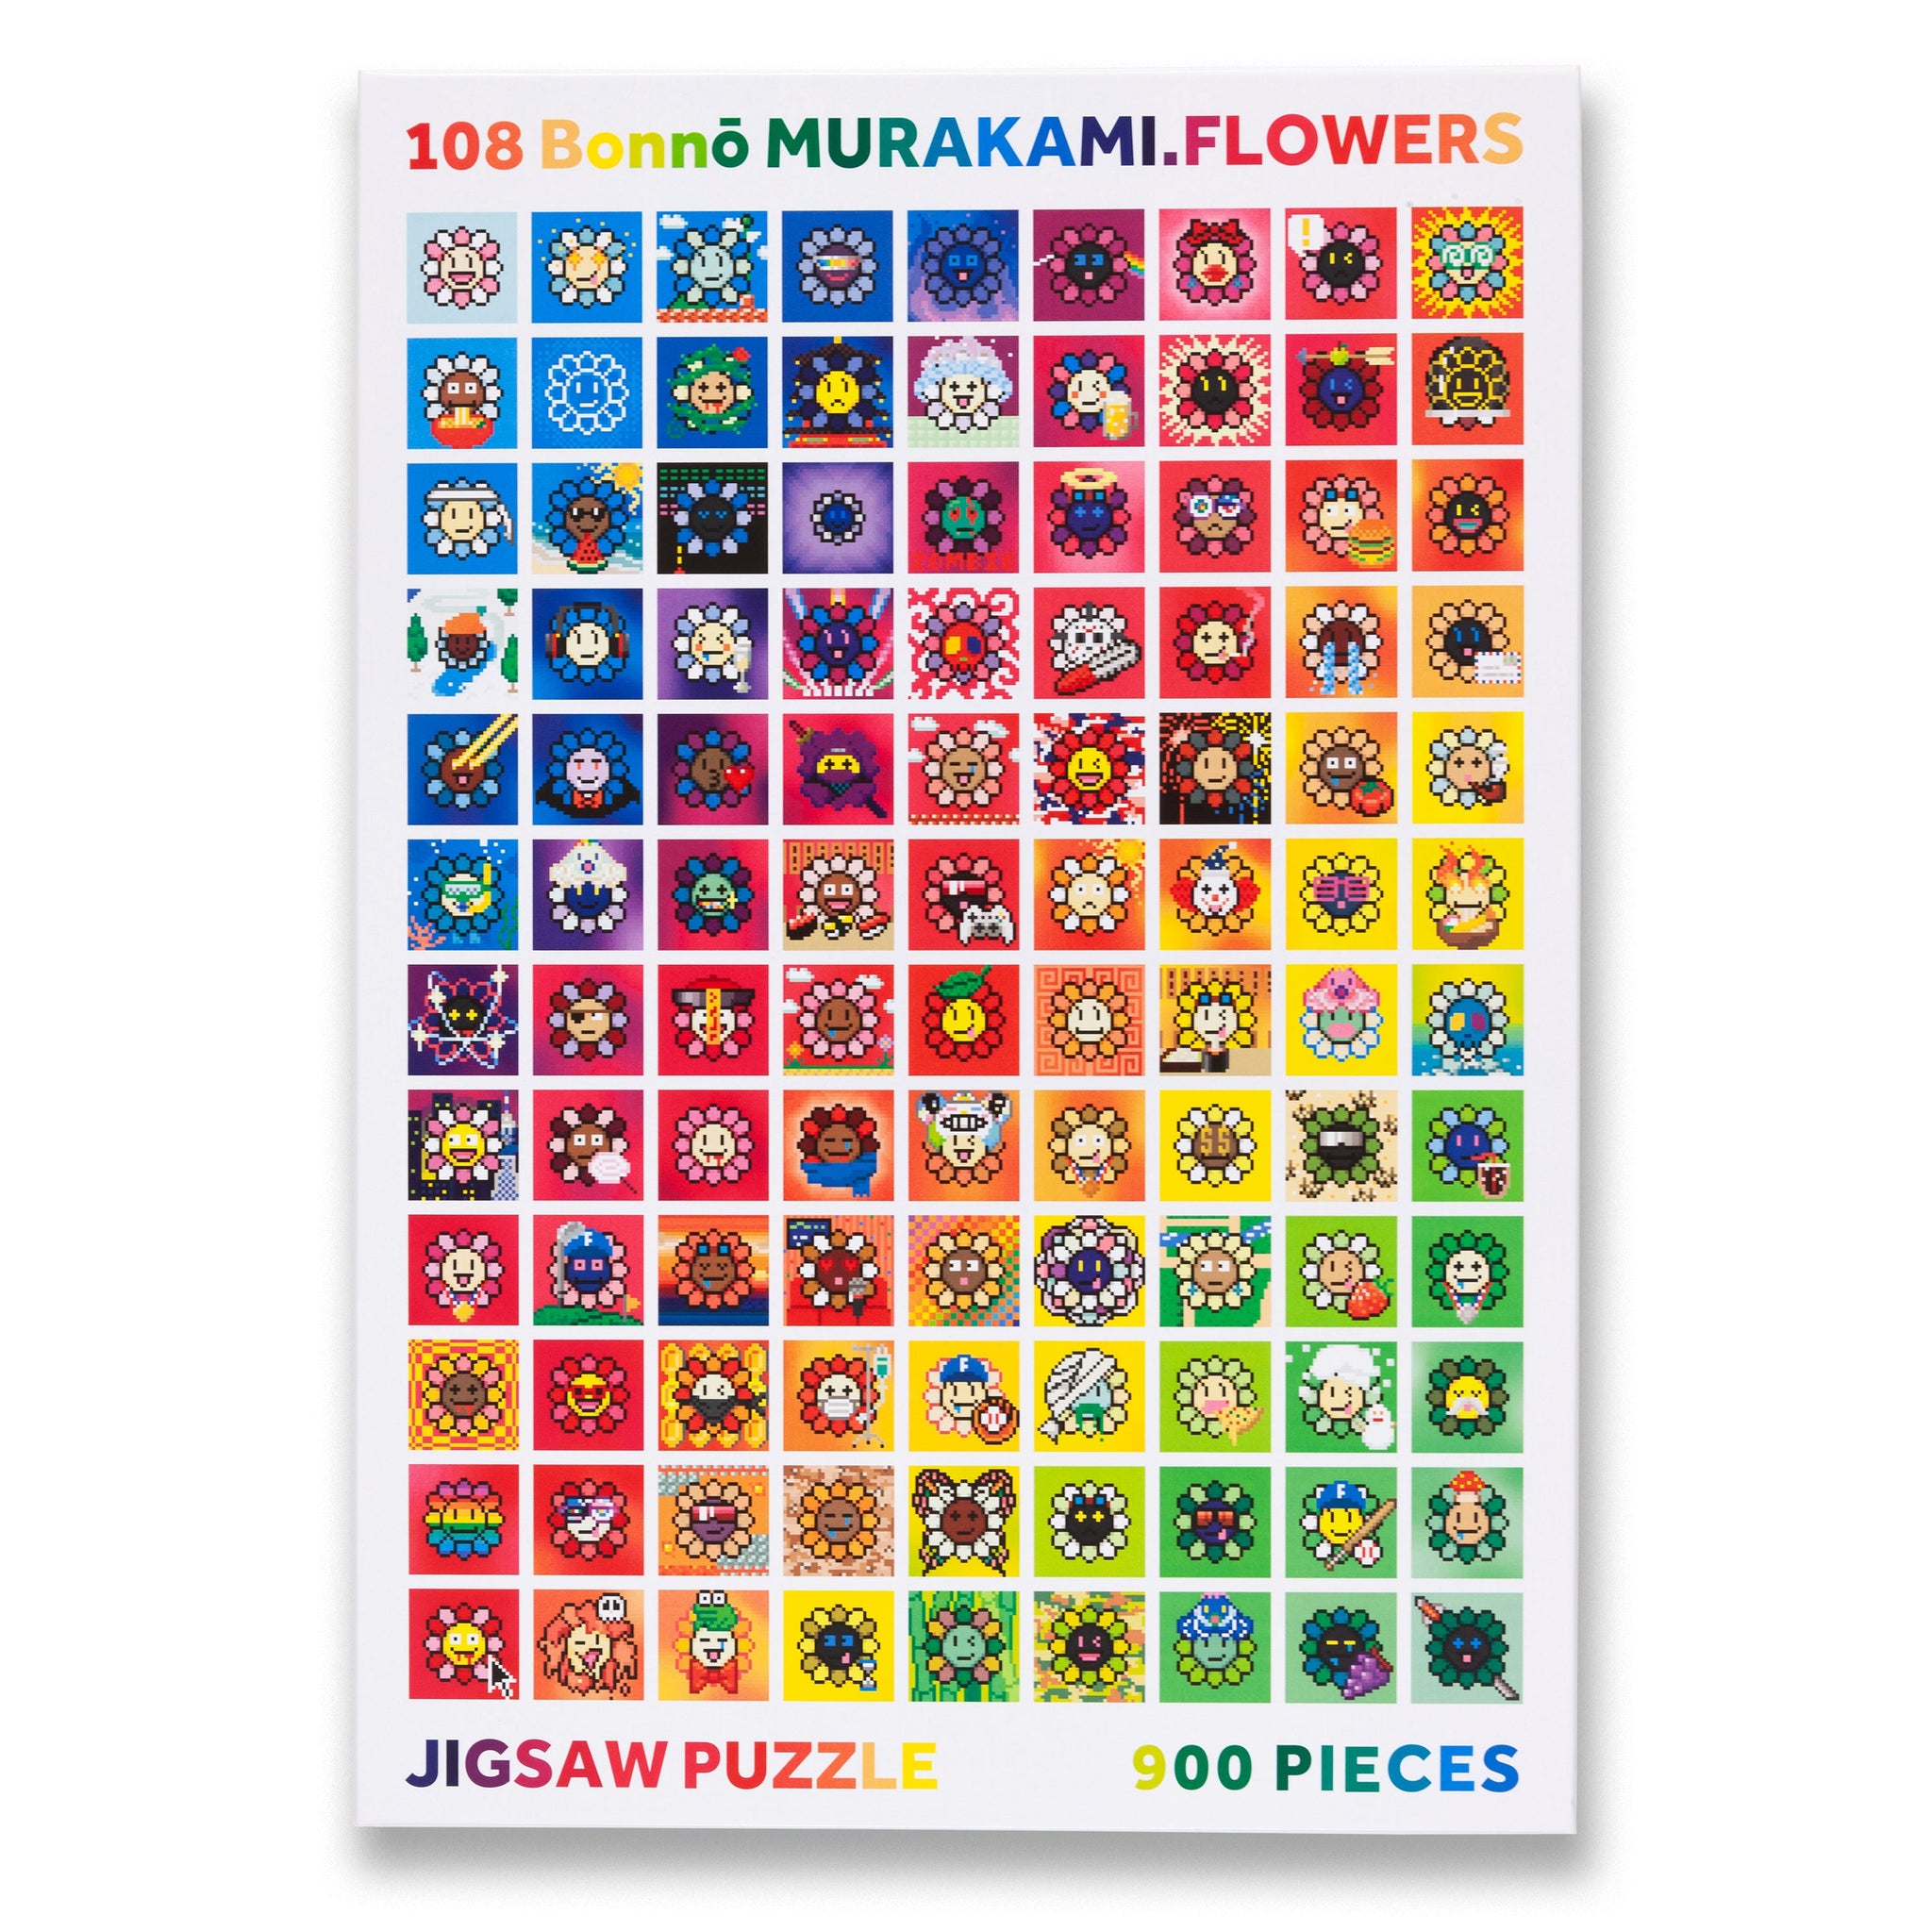 Takashi Murakami: 08 Bonnō Murakami.Flowers Jigsaw Puzzle